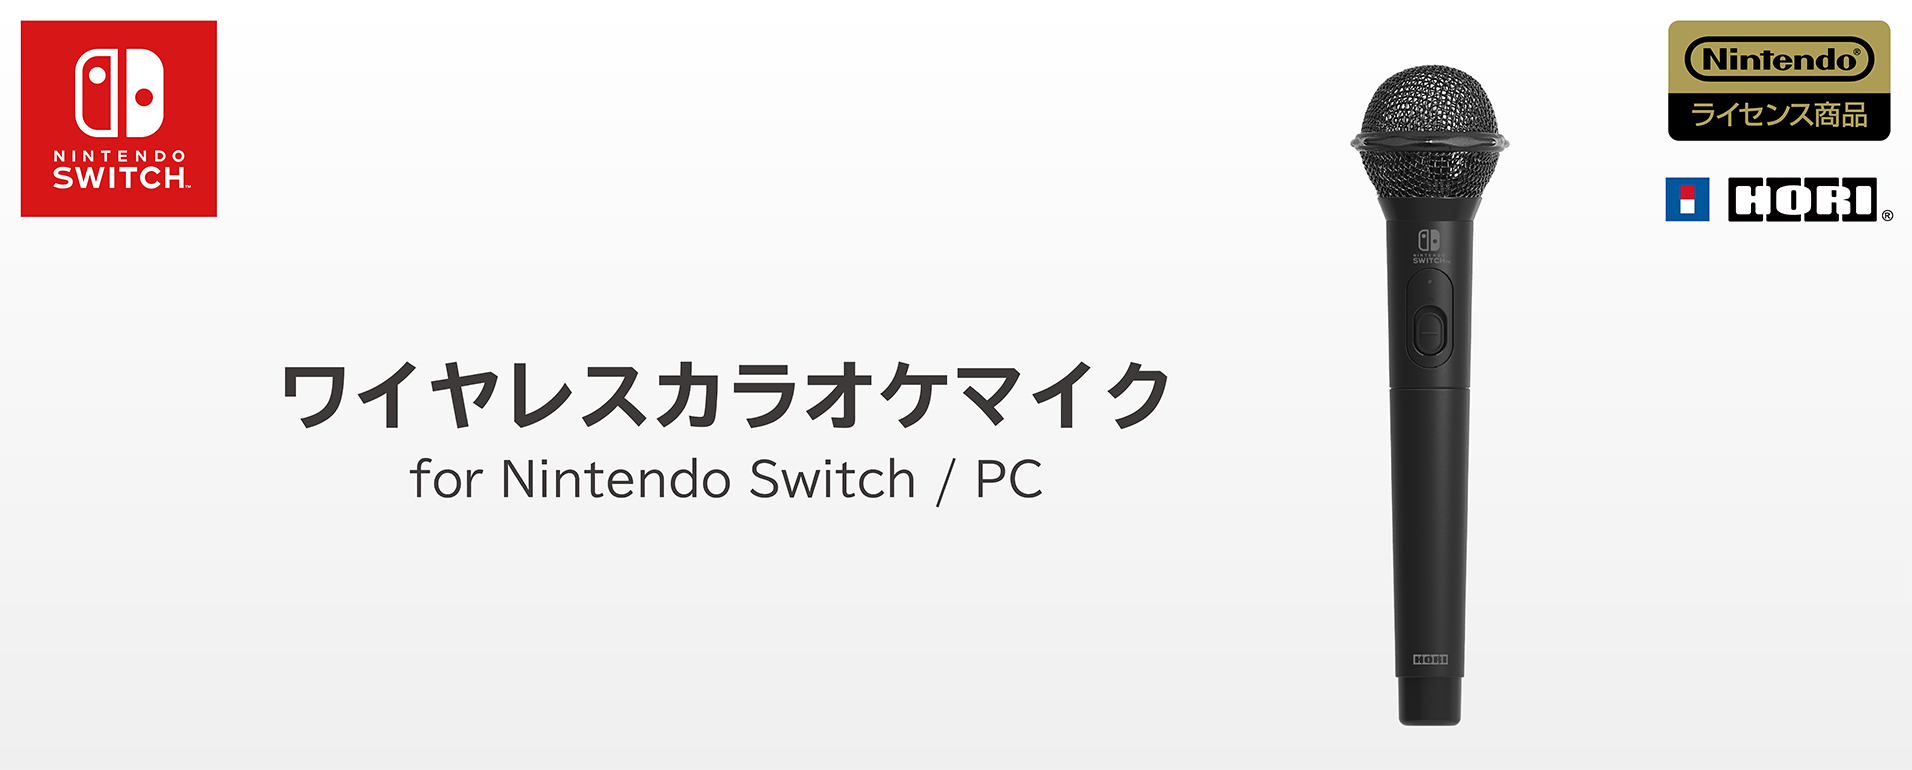 Nintendo Switch HORIマイク